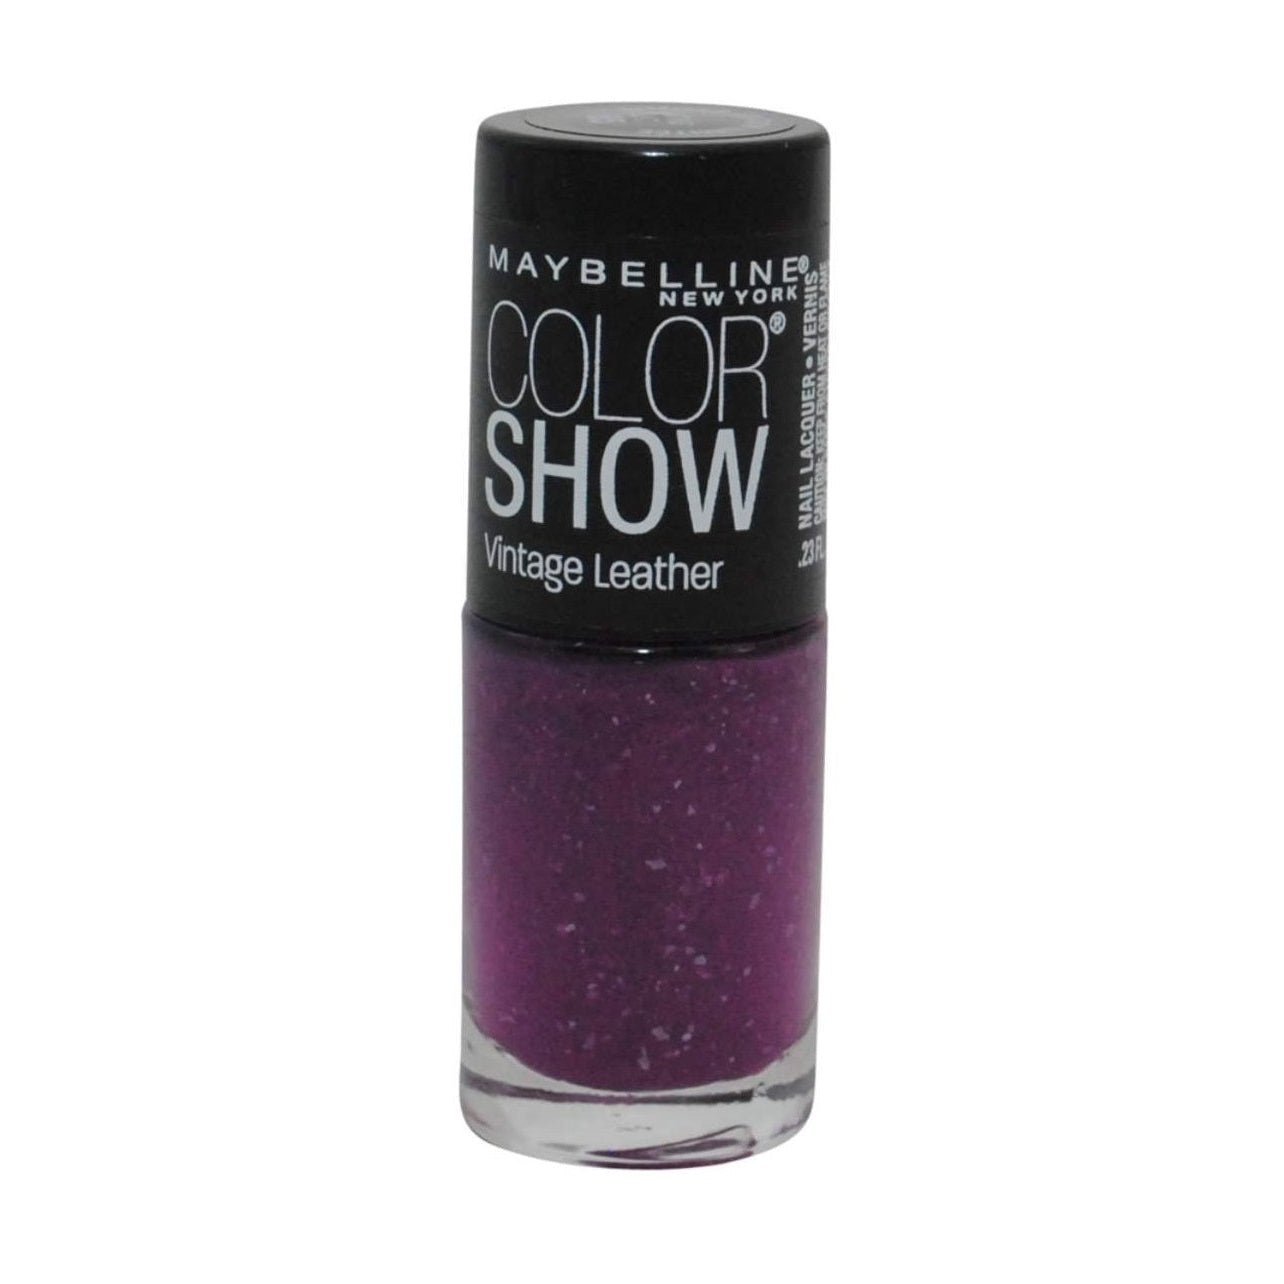 Maybelline Color Show Nail Paint: Velvet Wine: Review/NOTD | Divassence!